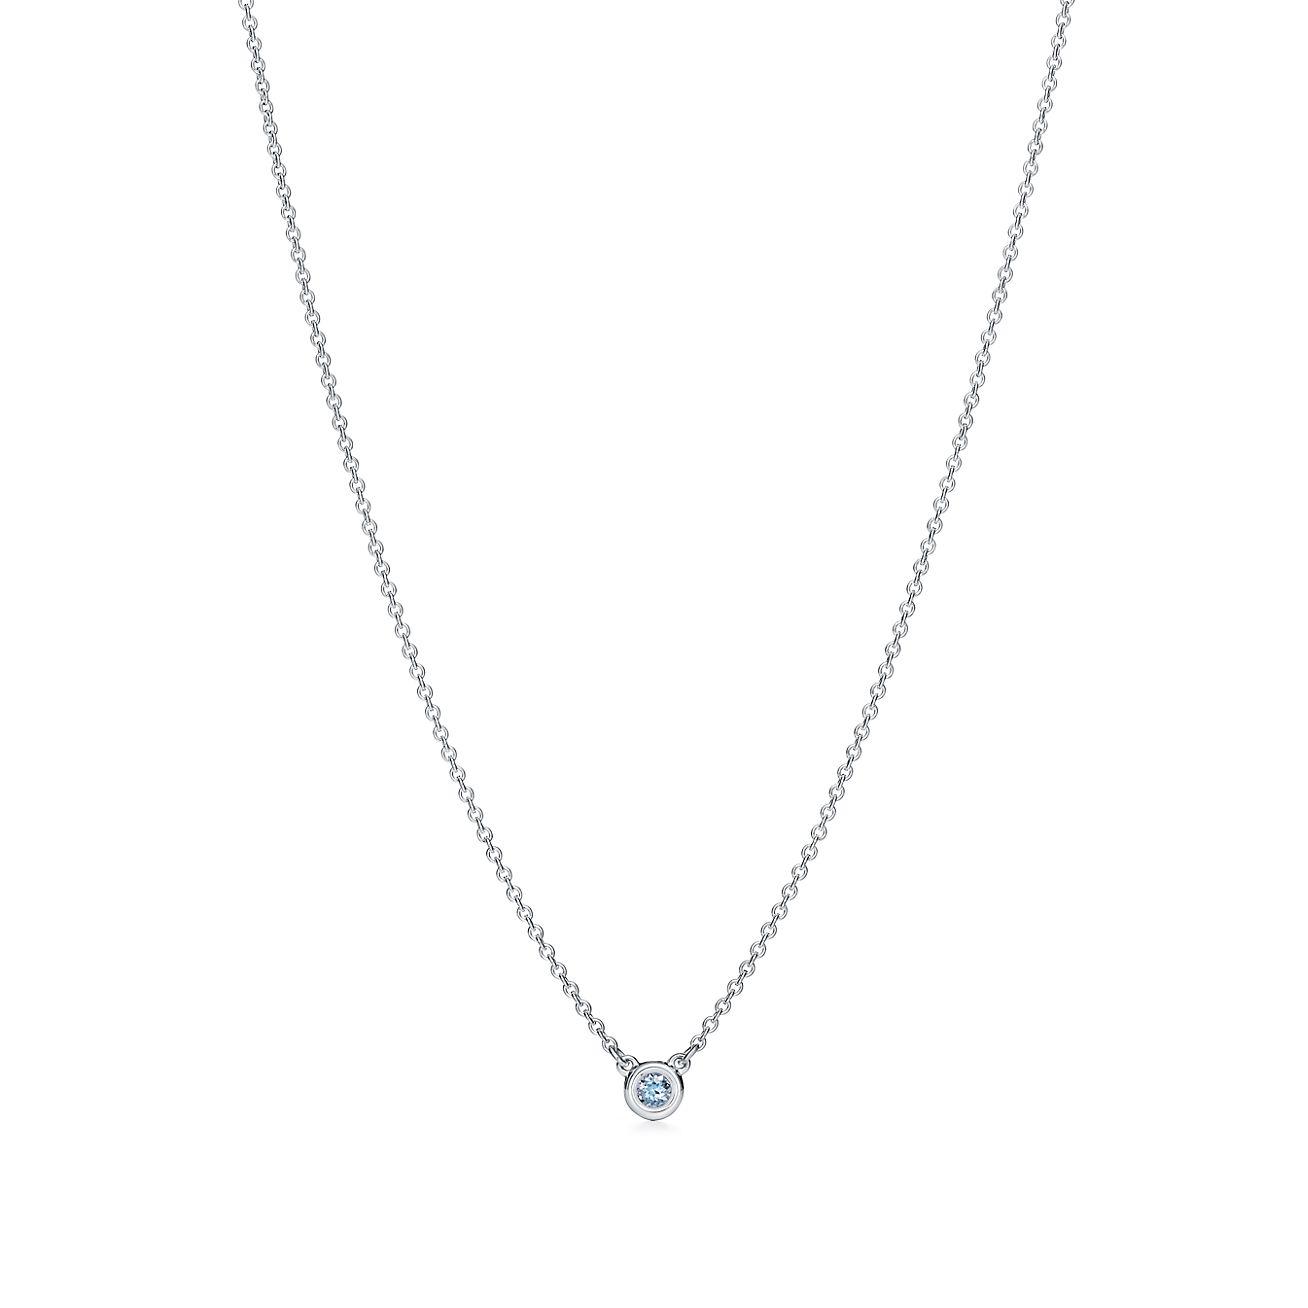 Tiffany & Co. Legacy Aquamarine and Diamond Pendant Necklace by Tiffany & Co.